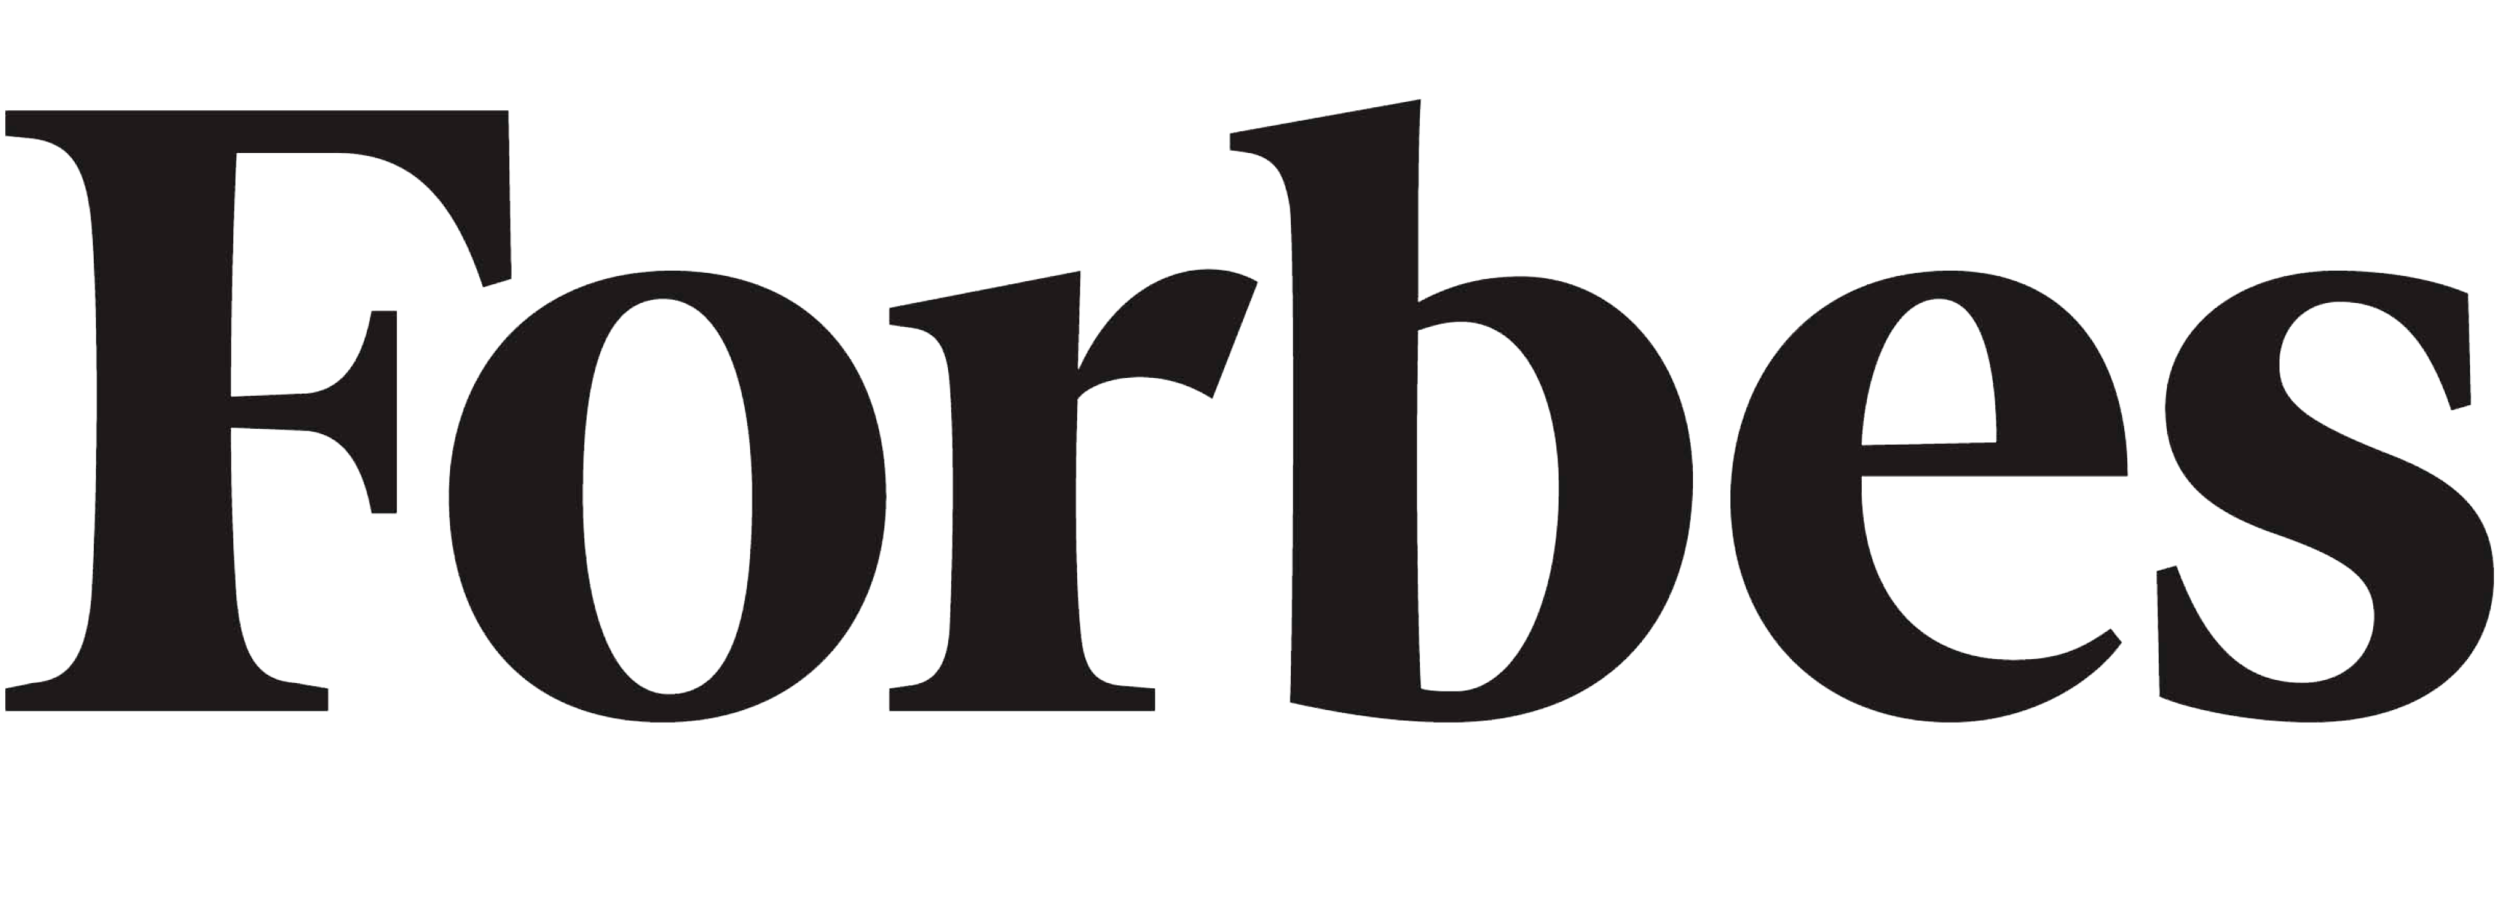 福布斯-black-logo-png-03003-2-e1517347676630.png